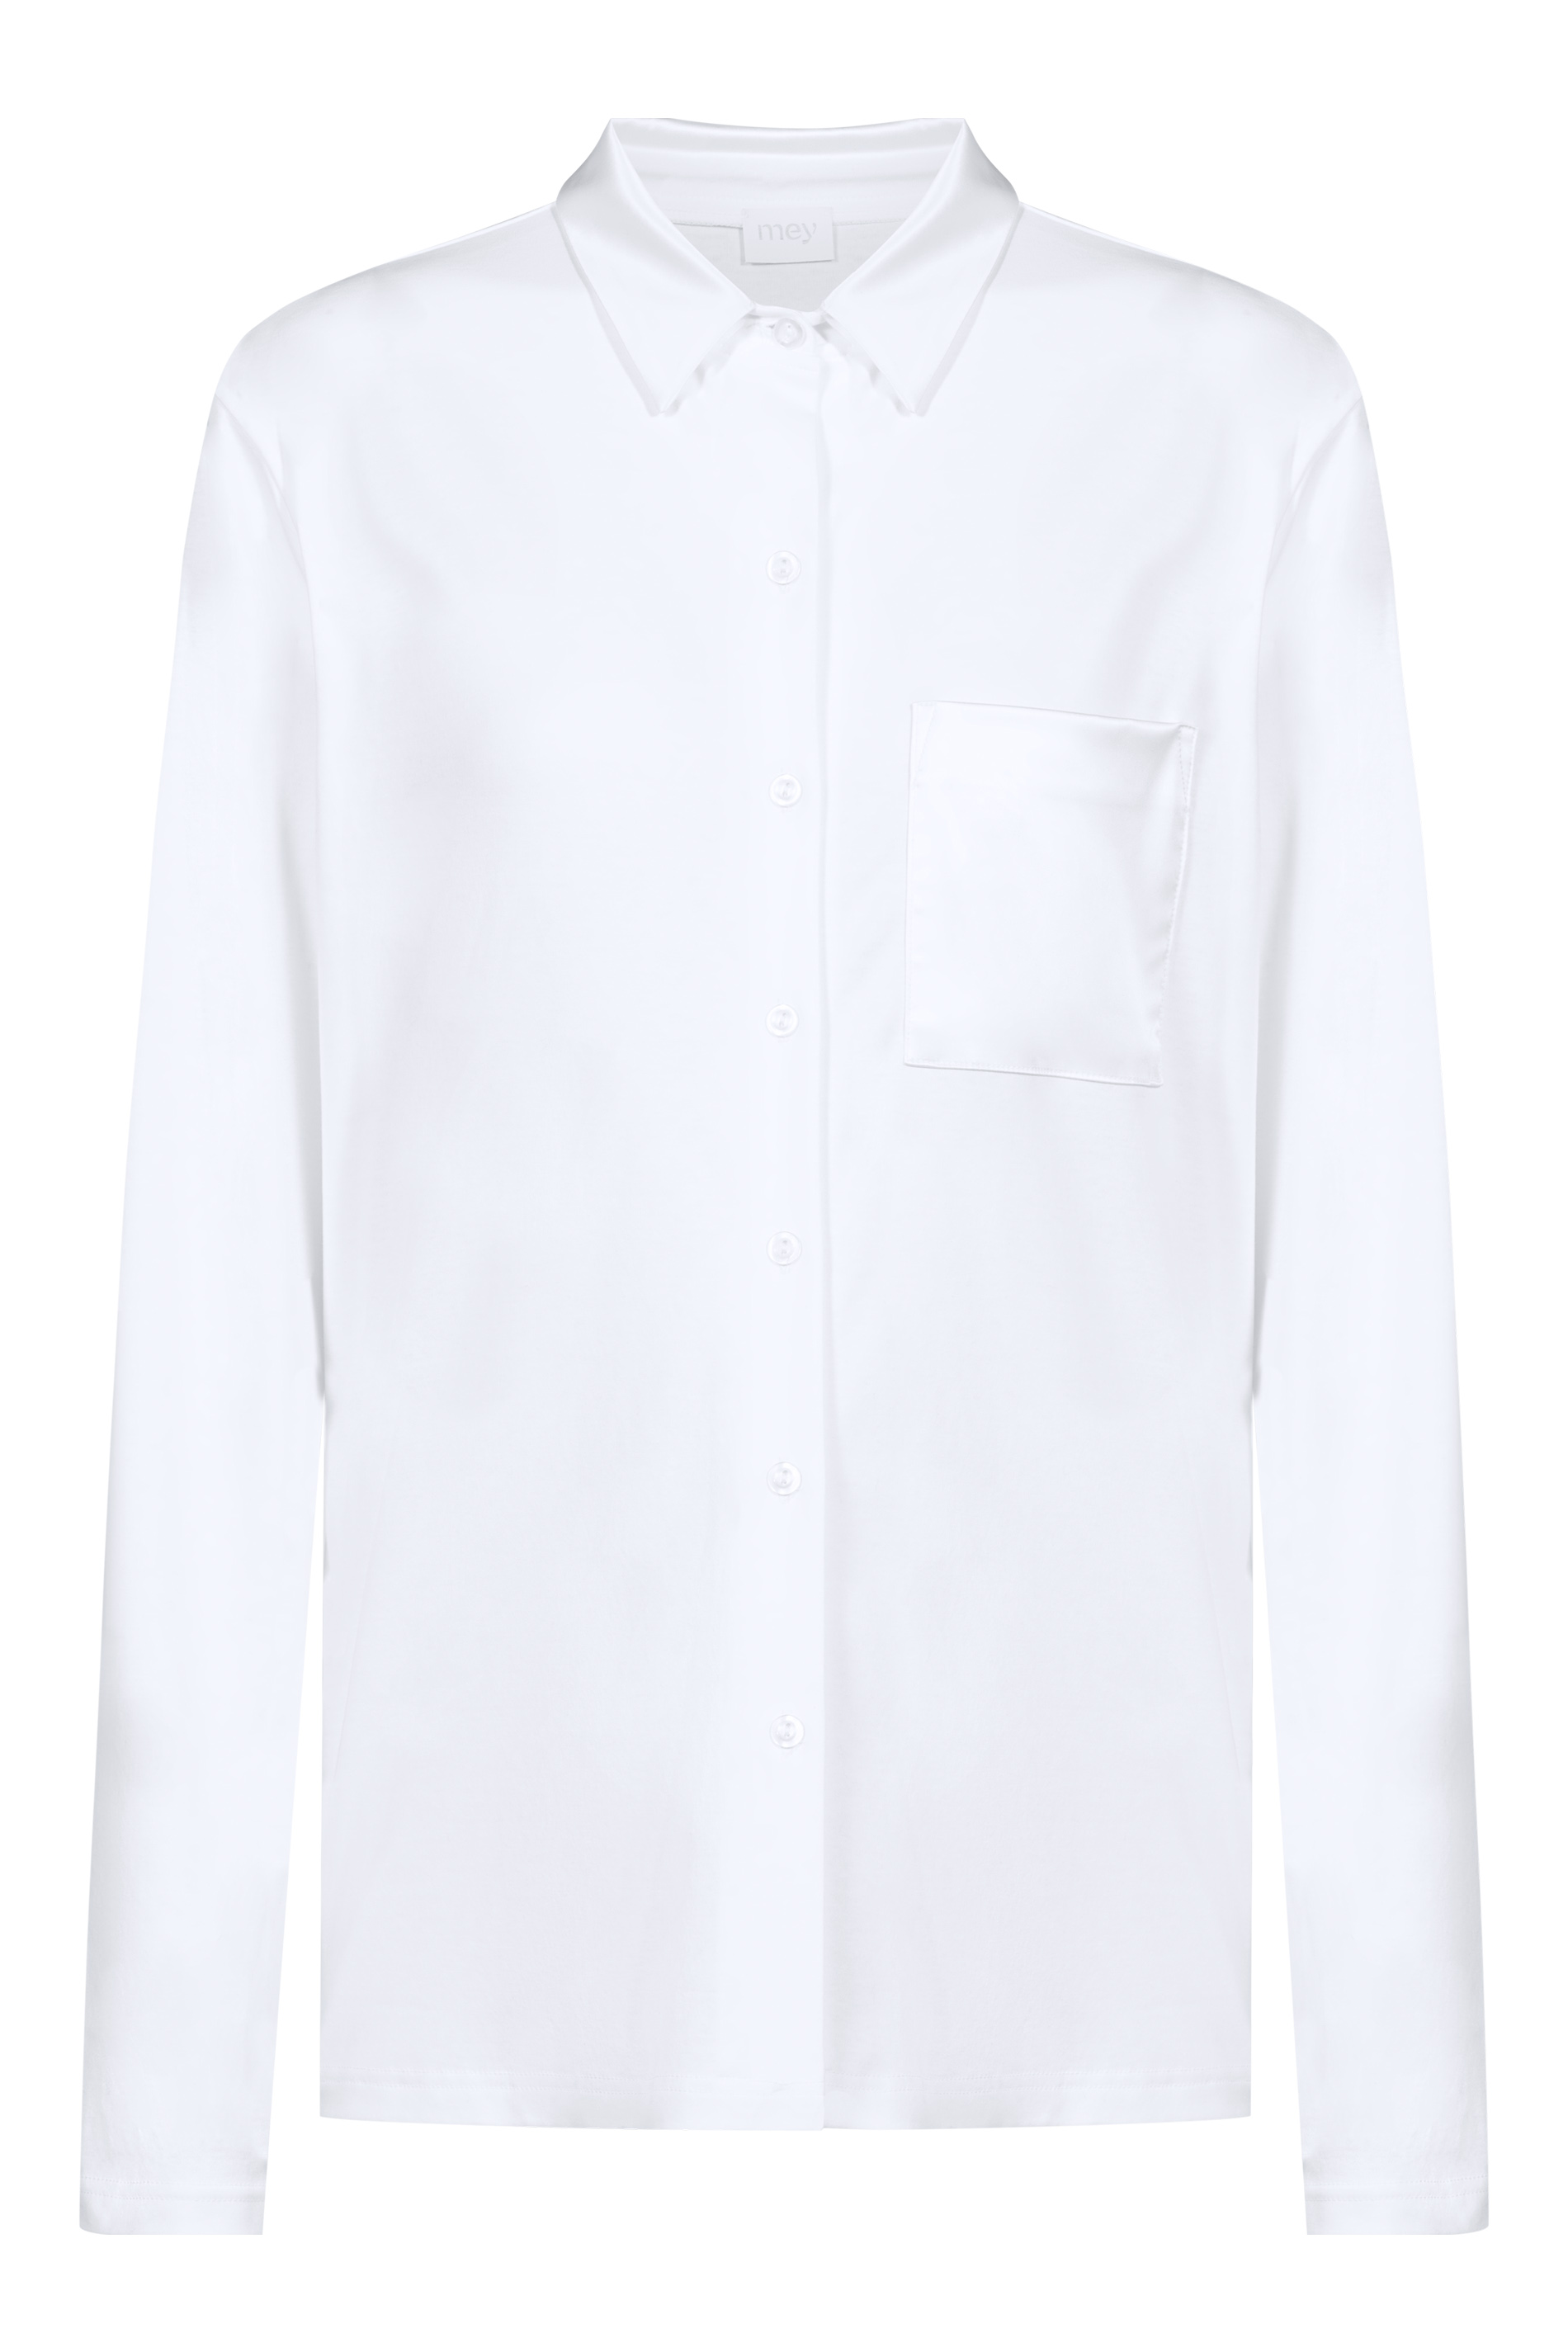 Pyjama Shirt Weiss Serie Sleepsation Freisteller | mey®